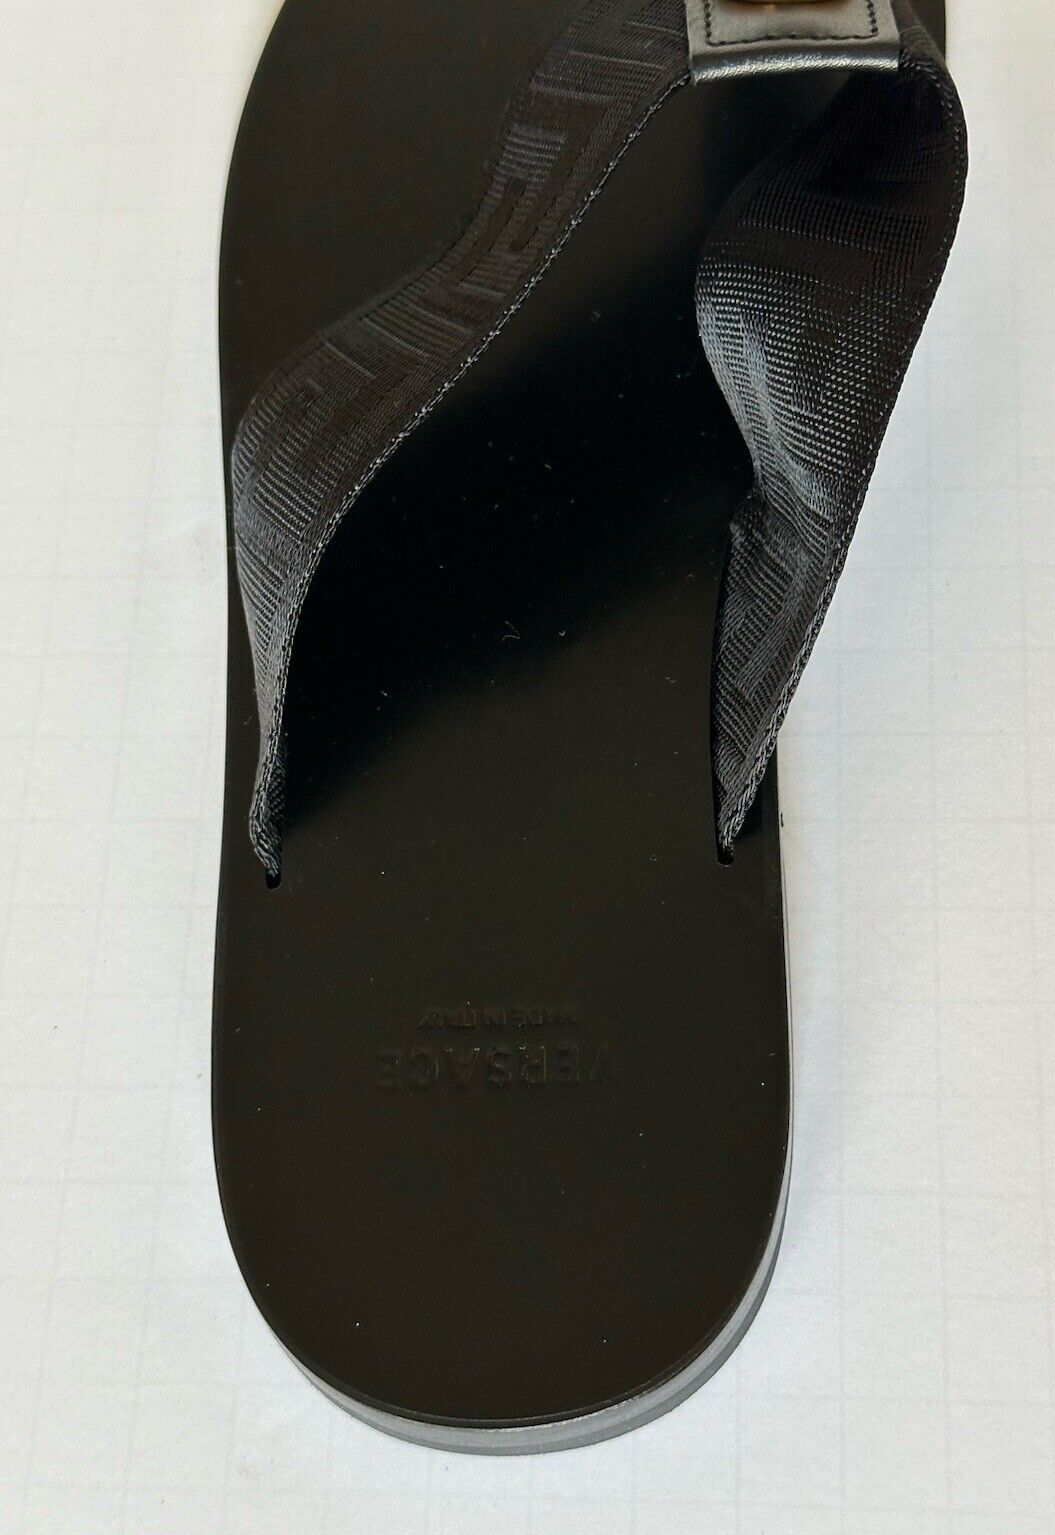 NIB Versace Men's Greca Signature Black Slides Sandals 7 US (40 Euro) DSU7340 IT